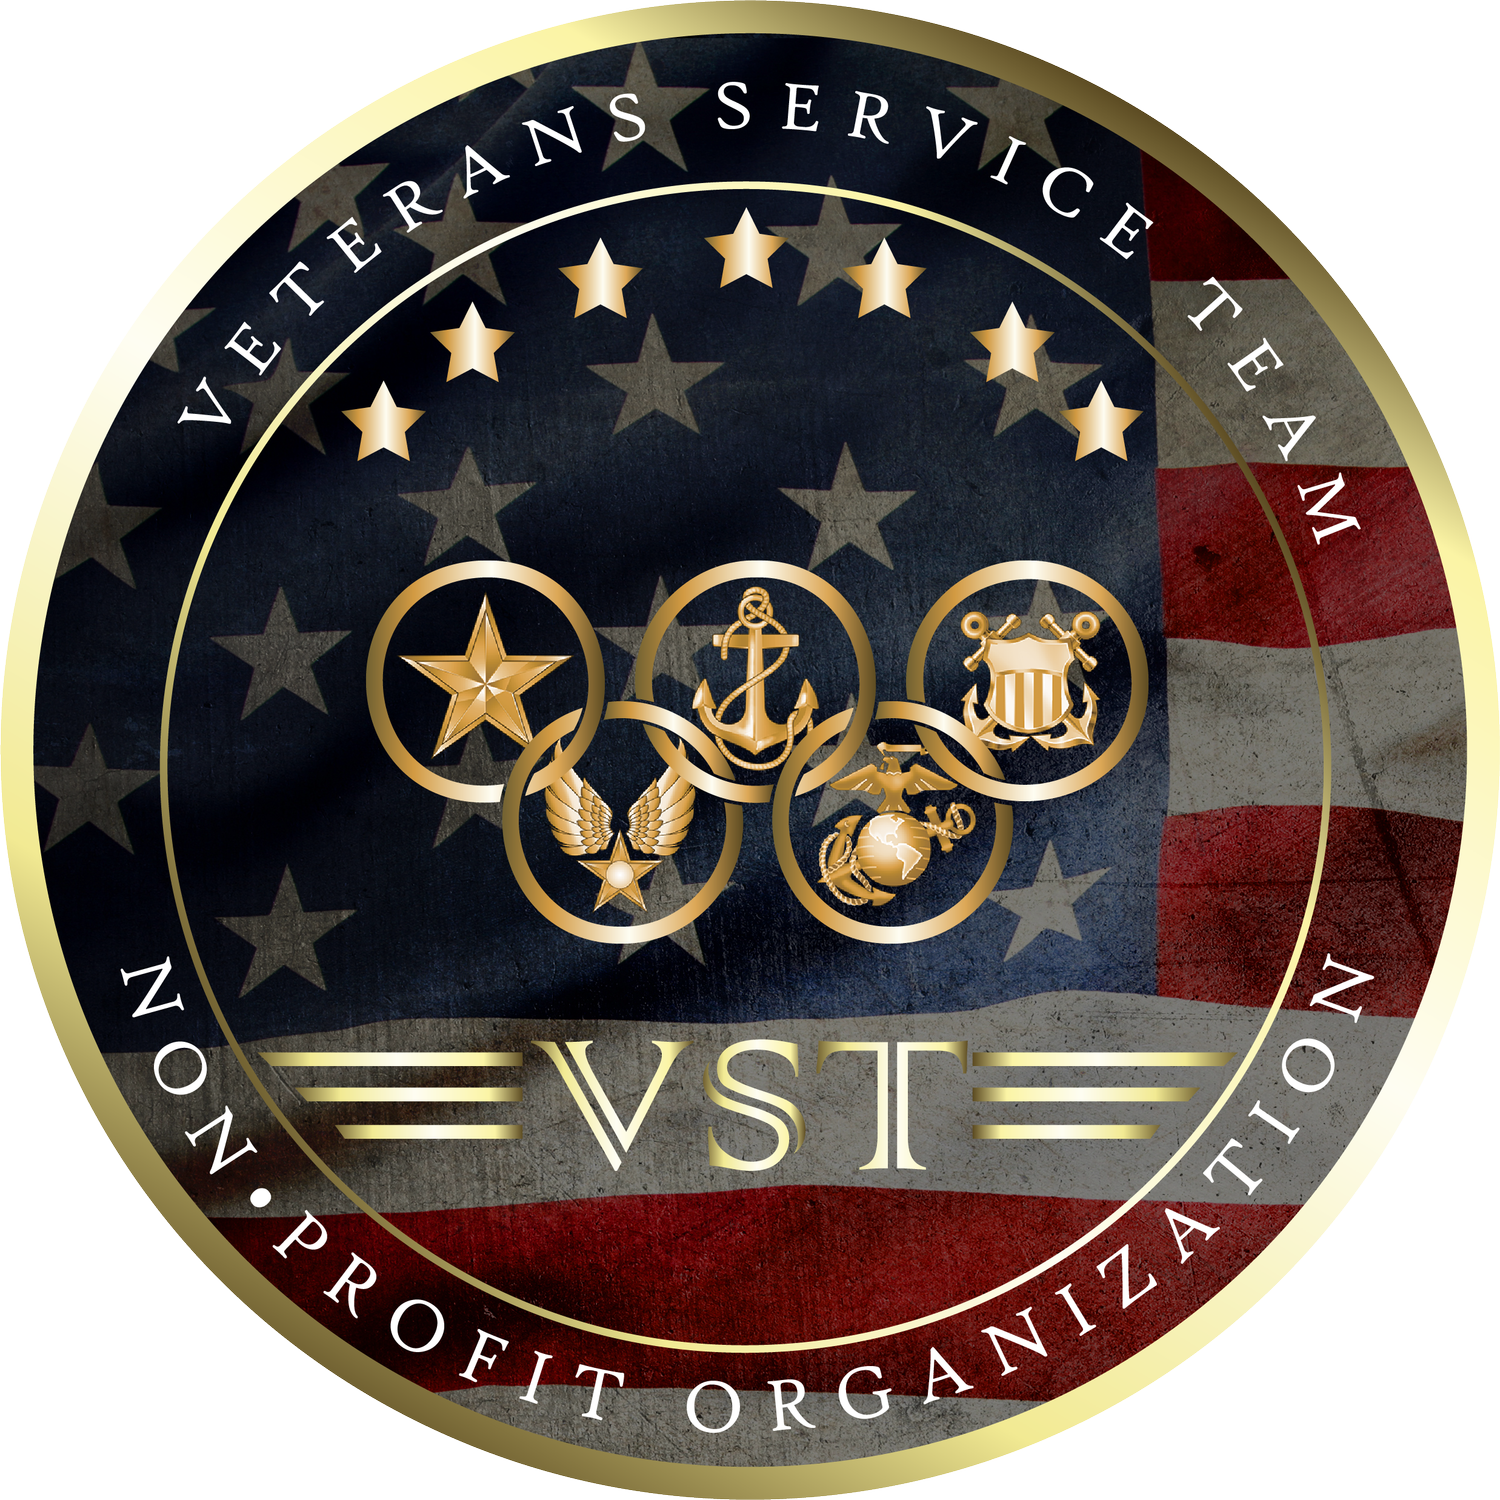 Veterans Service Team